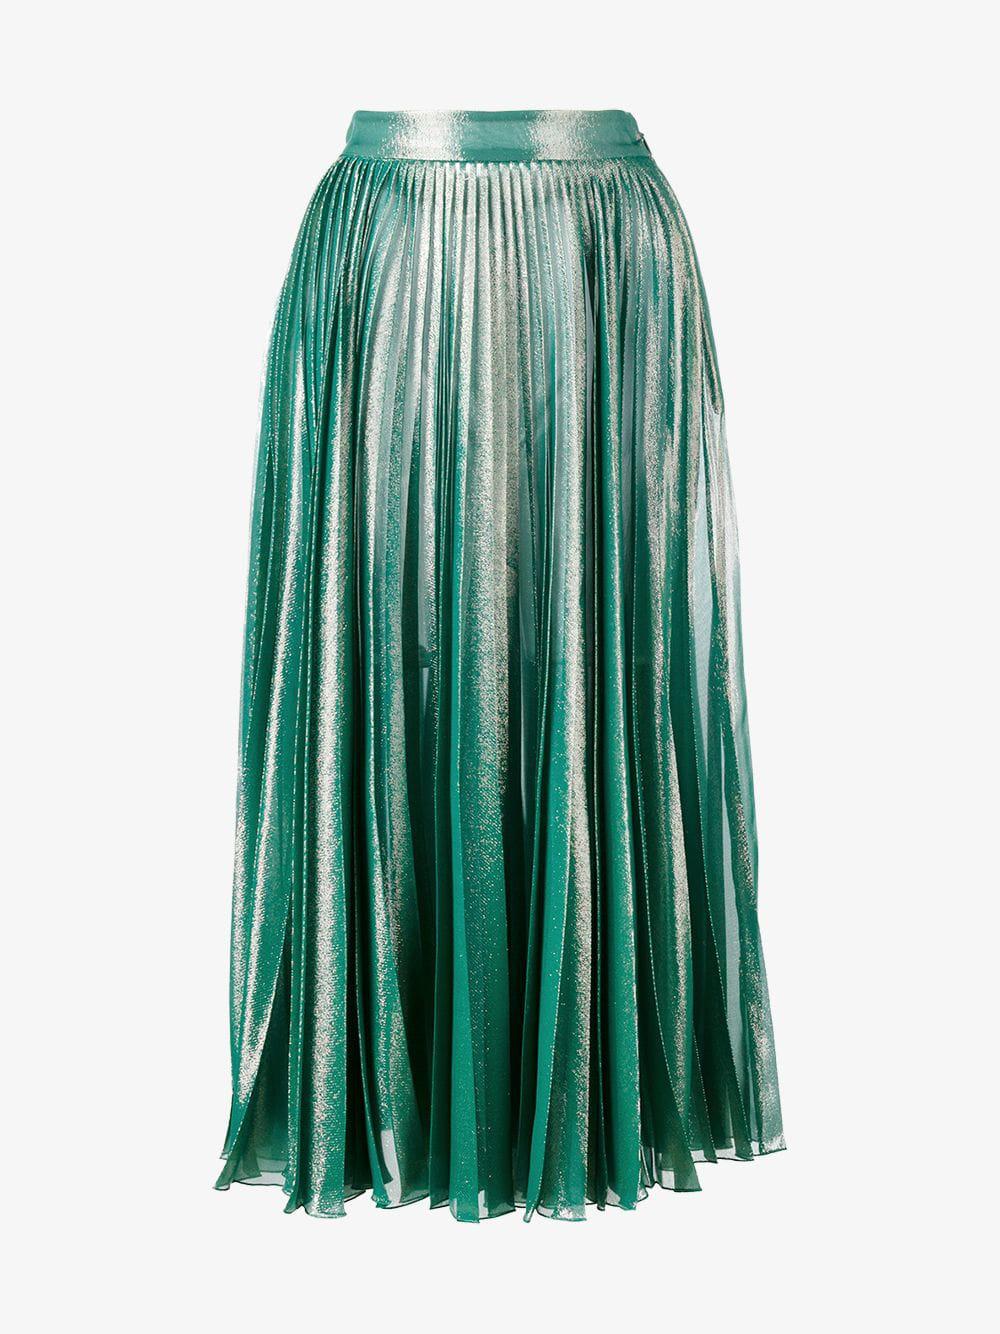 Gucci Pleated Metallic Skirt in Green - Lyst